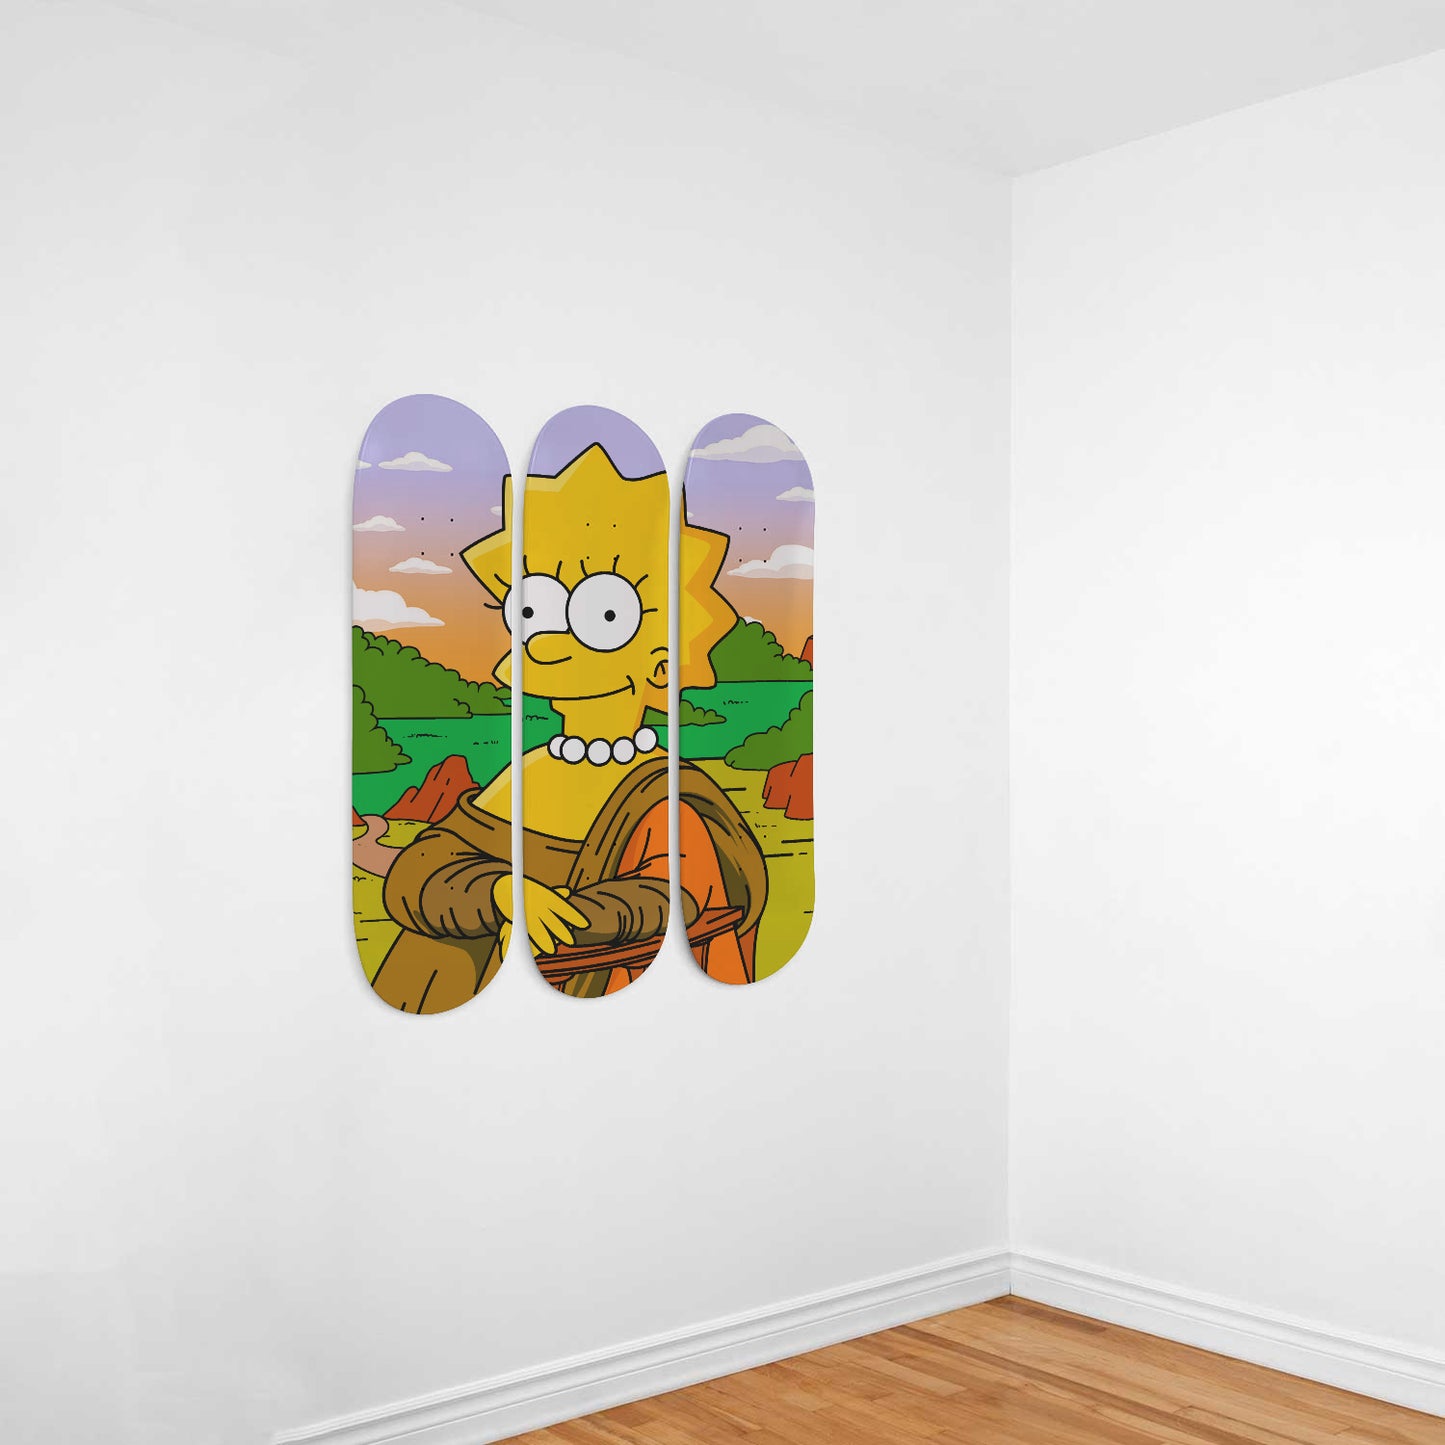 Mona Lisa Simpson | Wall Art - Mona Lisa Painting and Simpson Inspired | 3 Piece Skateboard Wall Art, Deck Art | Wall Hanging Decor